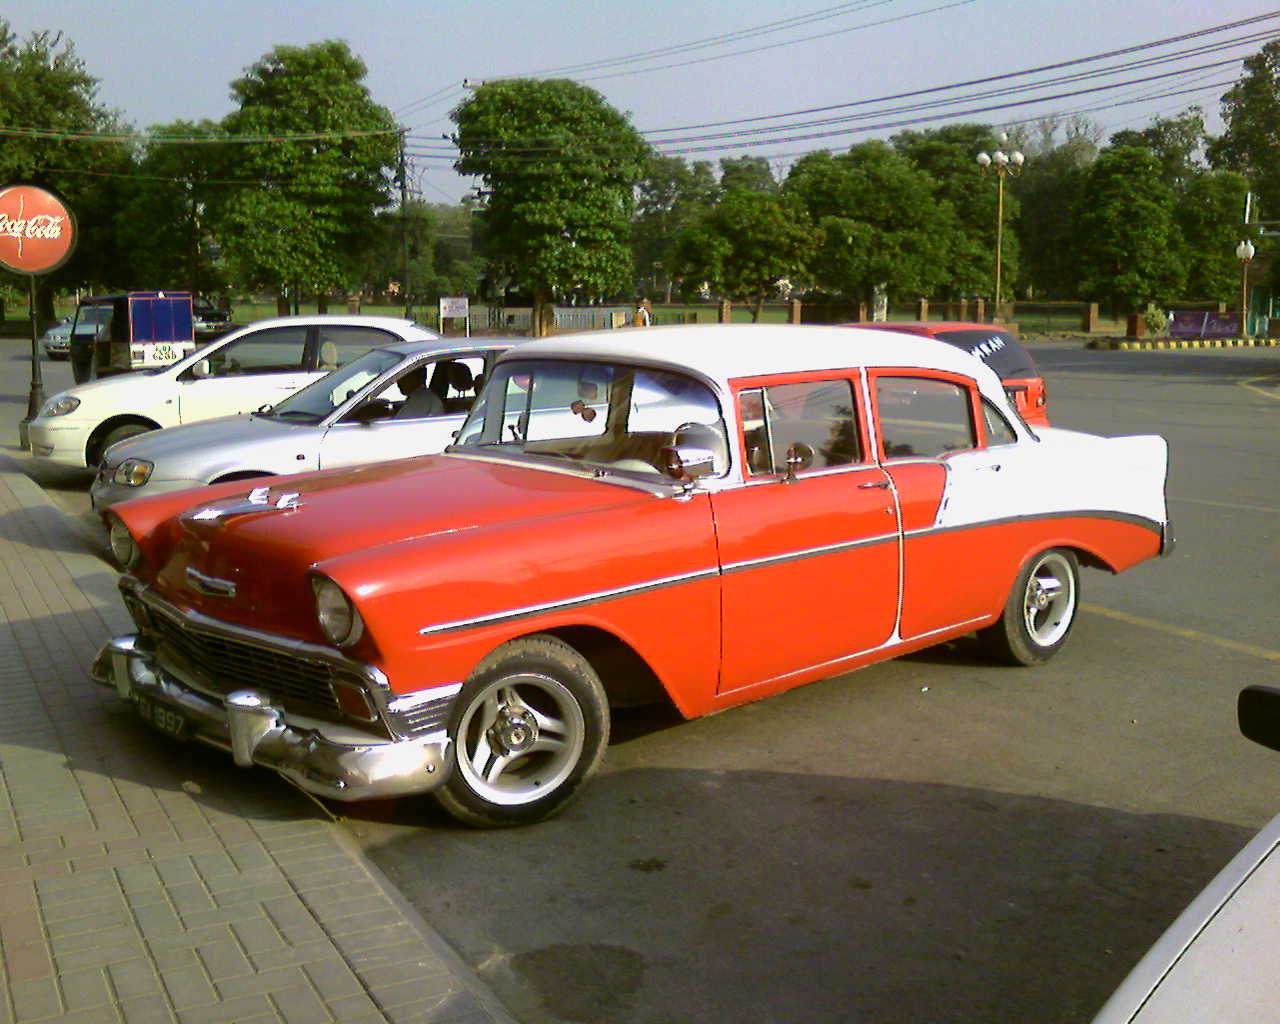 old classic car